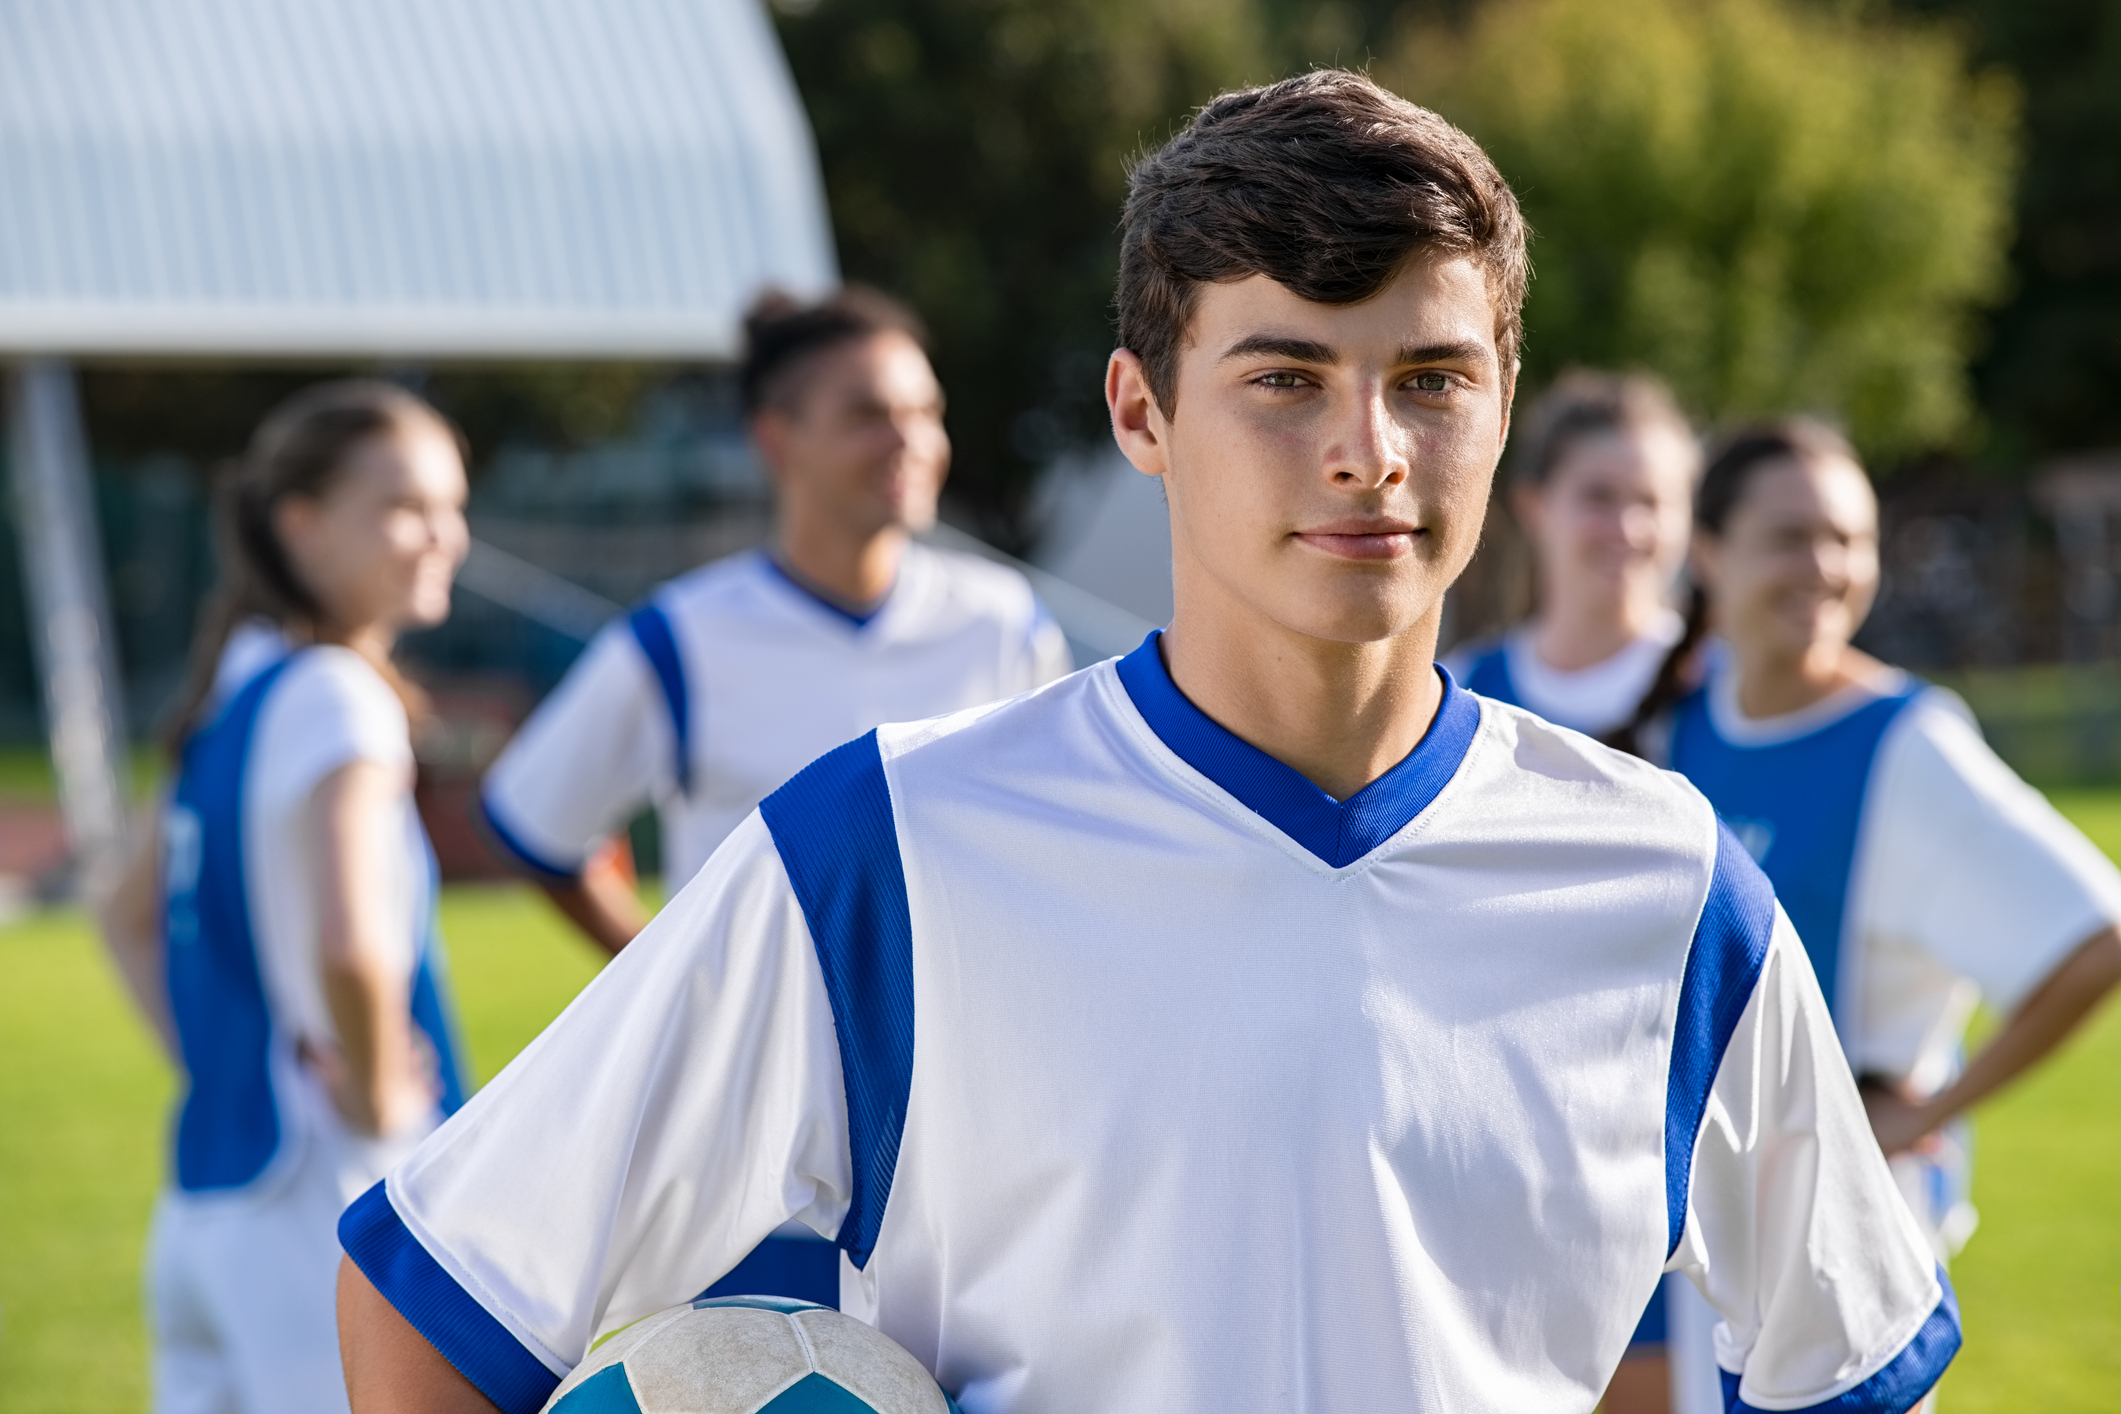 A teenager in sports gear.